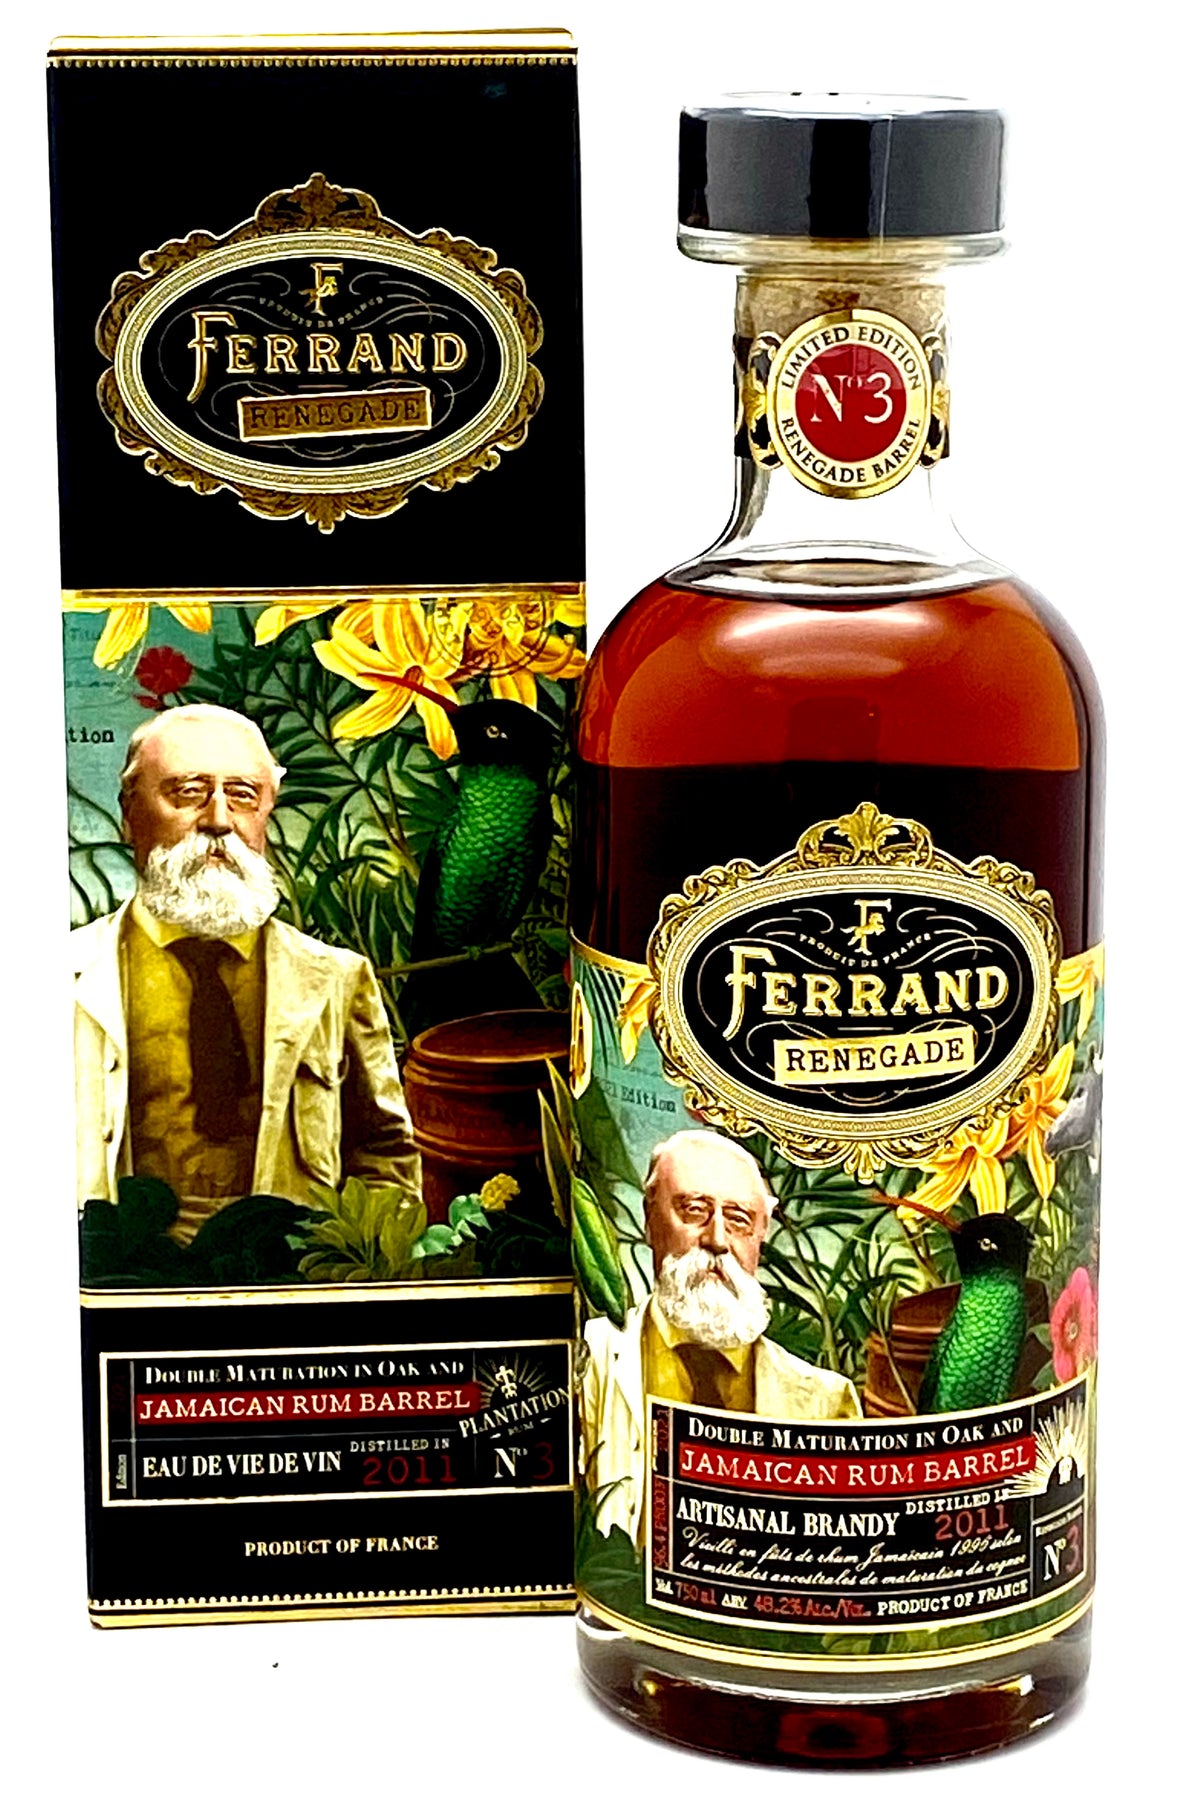 Pierre Ferrand Cognac Renegade Barrel #3